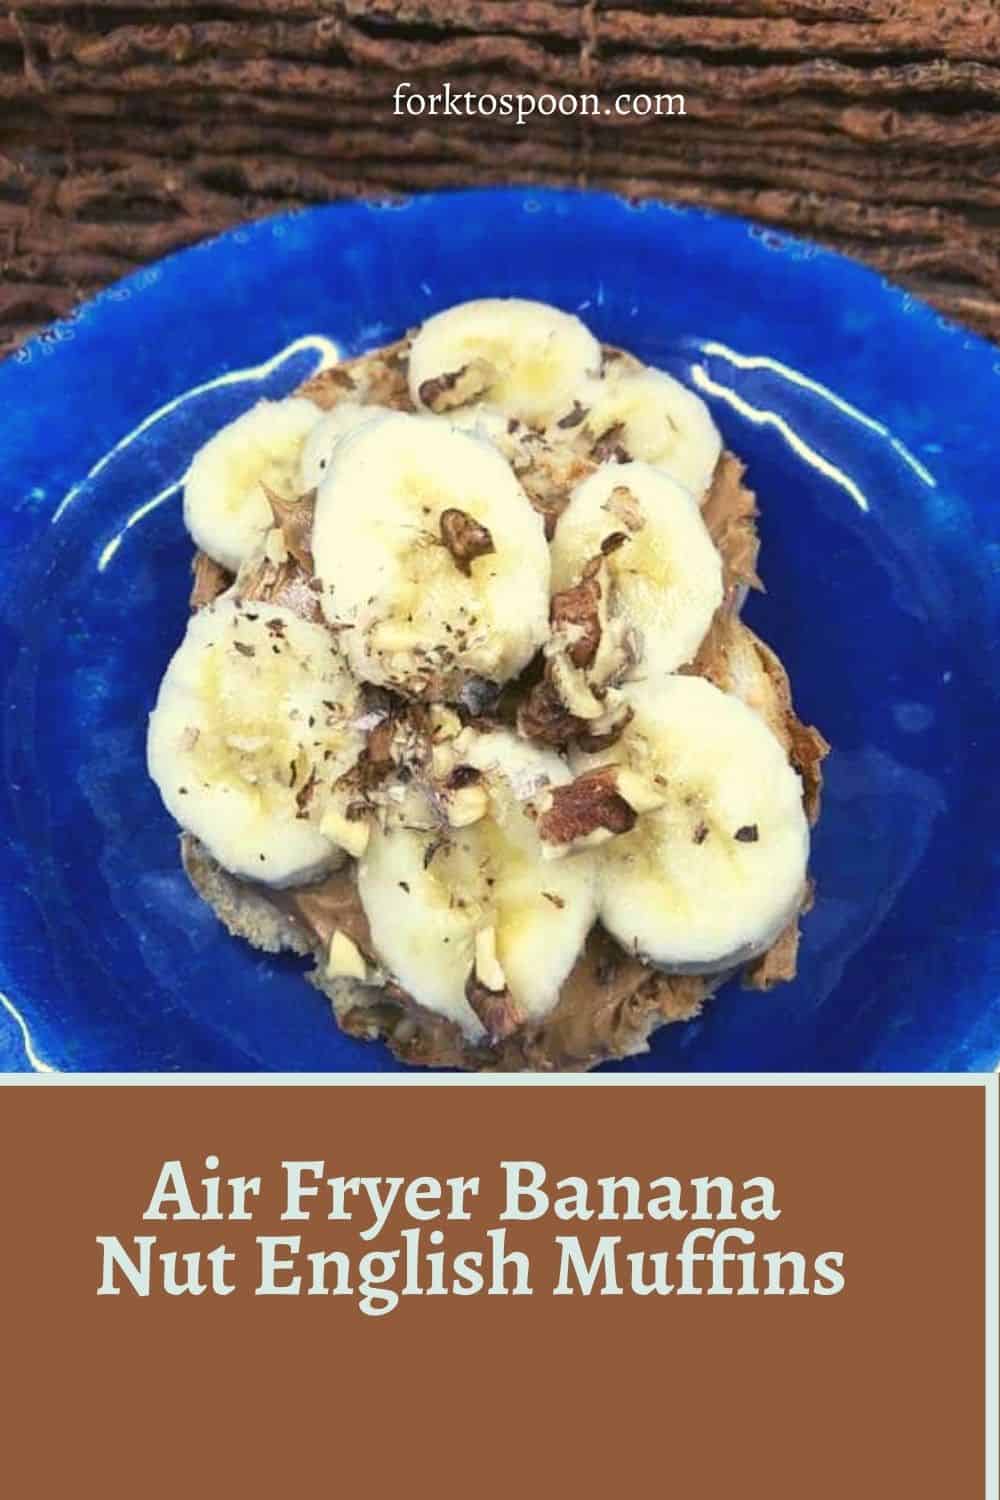 Air Fryer Banana Nut English Muffins